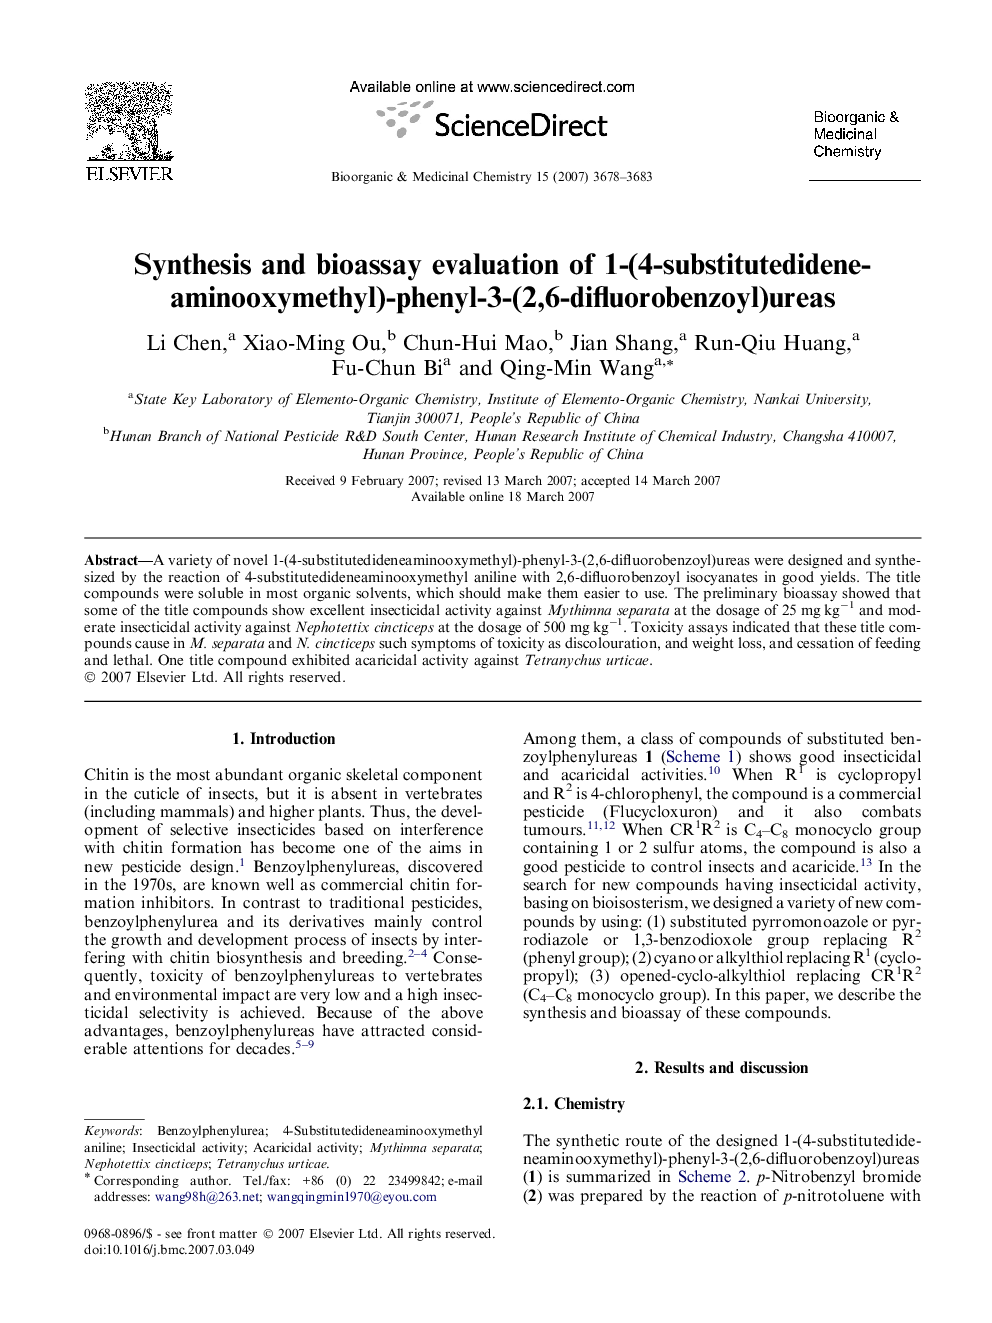 Synthesis and bioassay evaluation of 1-(4-substitutedideneaminooxymethyl)-phenyl-3-(2,6-difluorobenzoyl)ureas